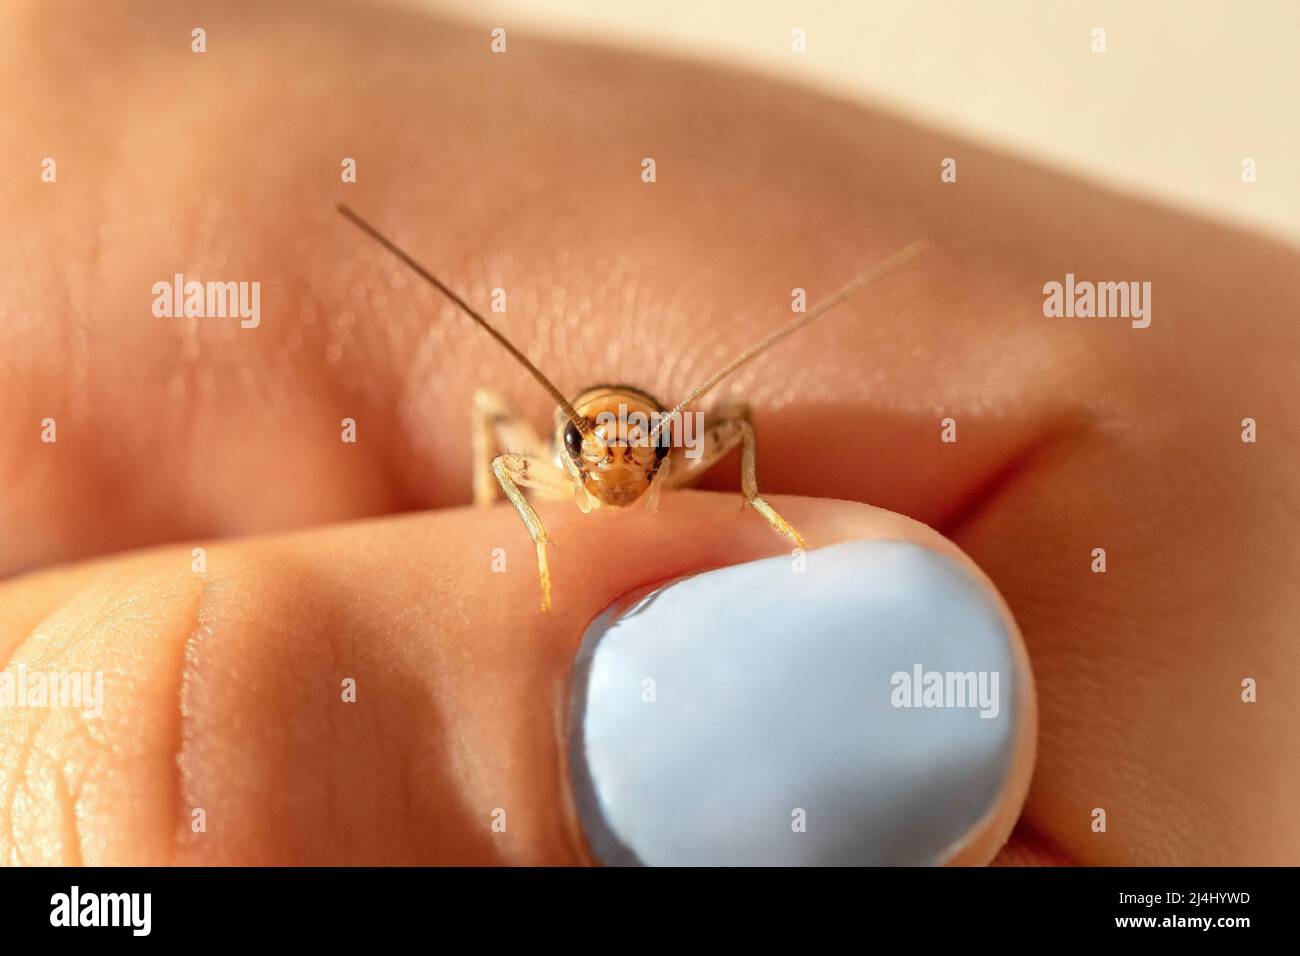 Cute cricket inside a girl's hand Stock Photo